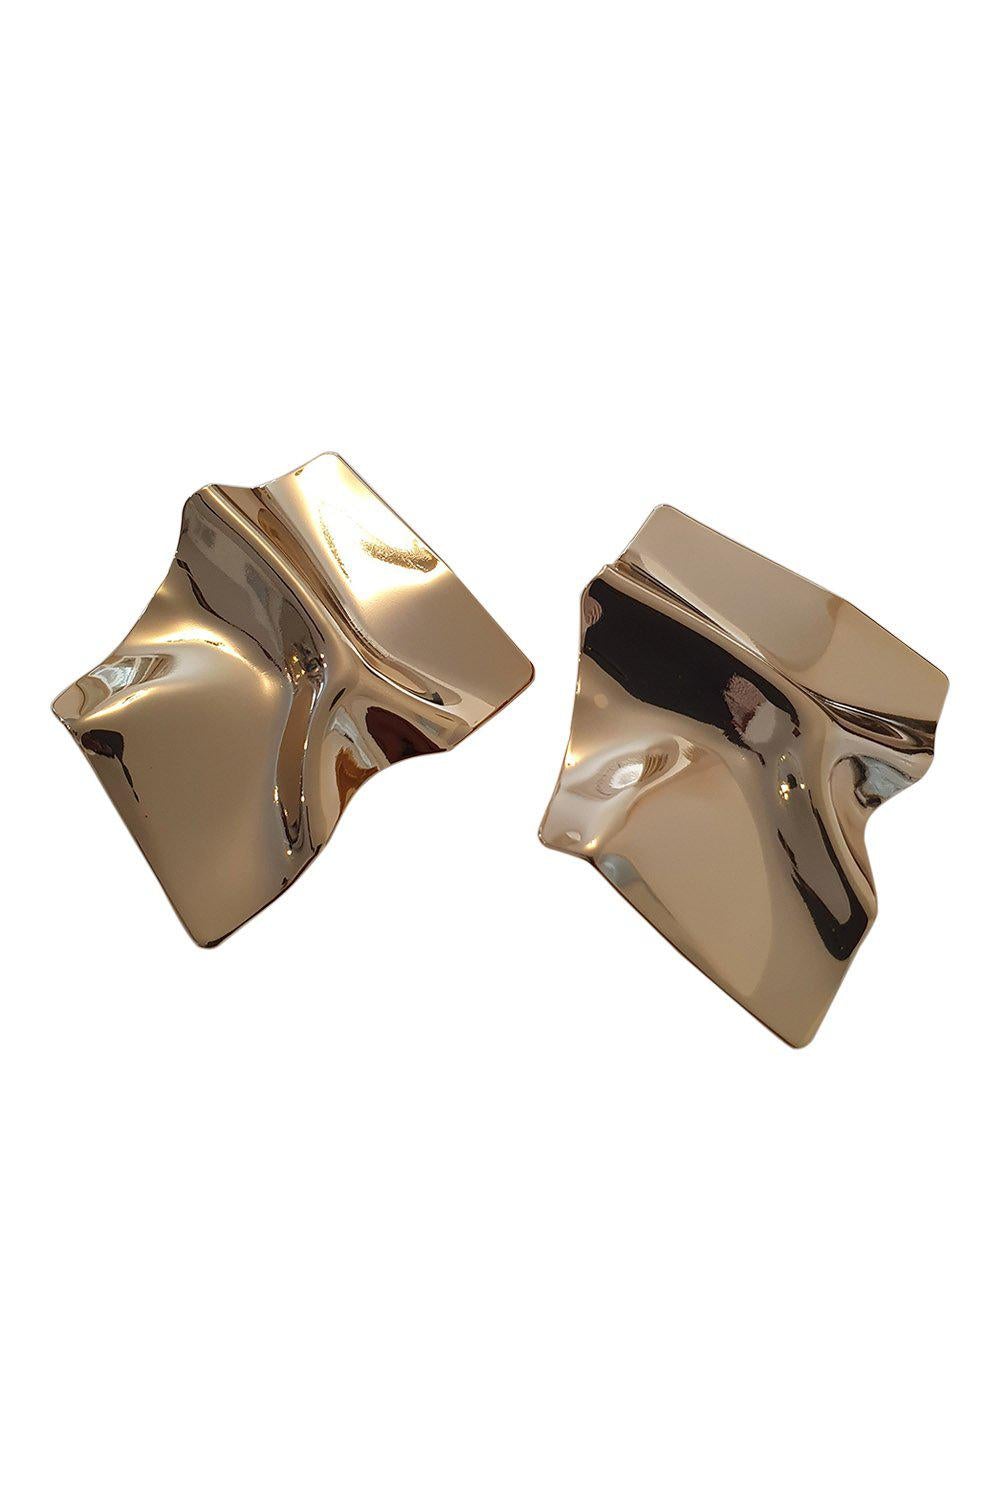 MeMe London 18k Gold Plated Sheet Metal Flavio Earrings (L)-MeMe London-The Freperie